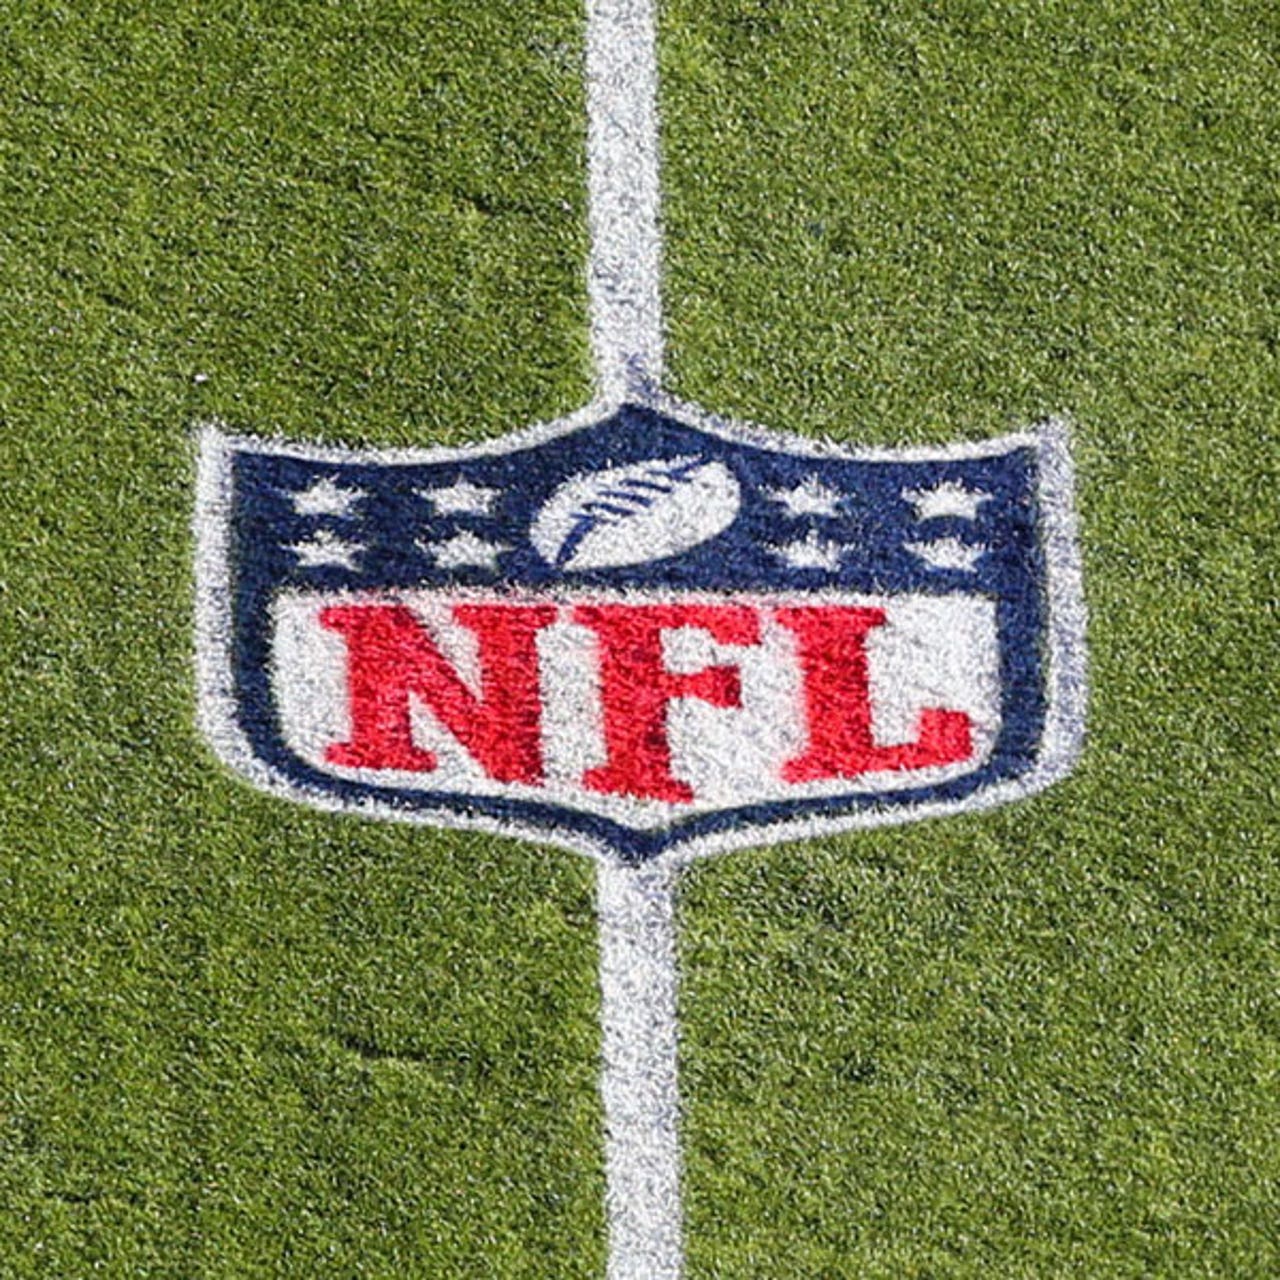 2023 NFL overtime rules: Regular season vs playoffs